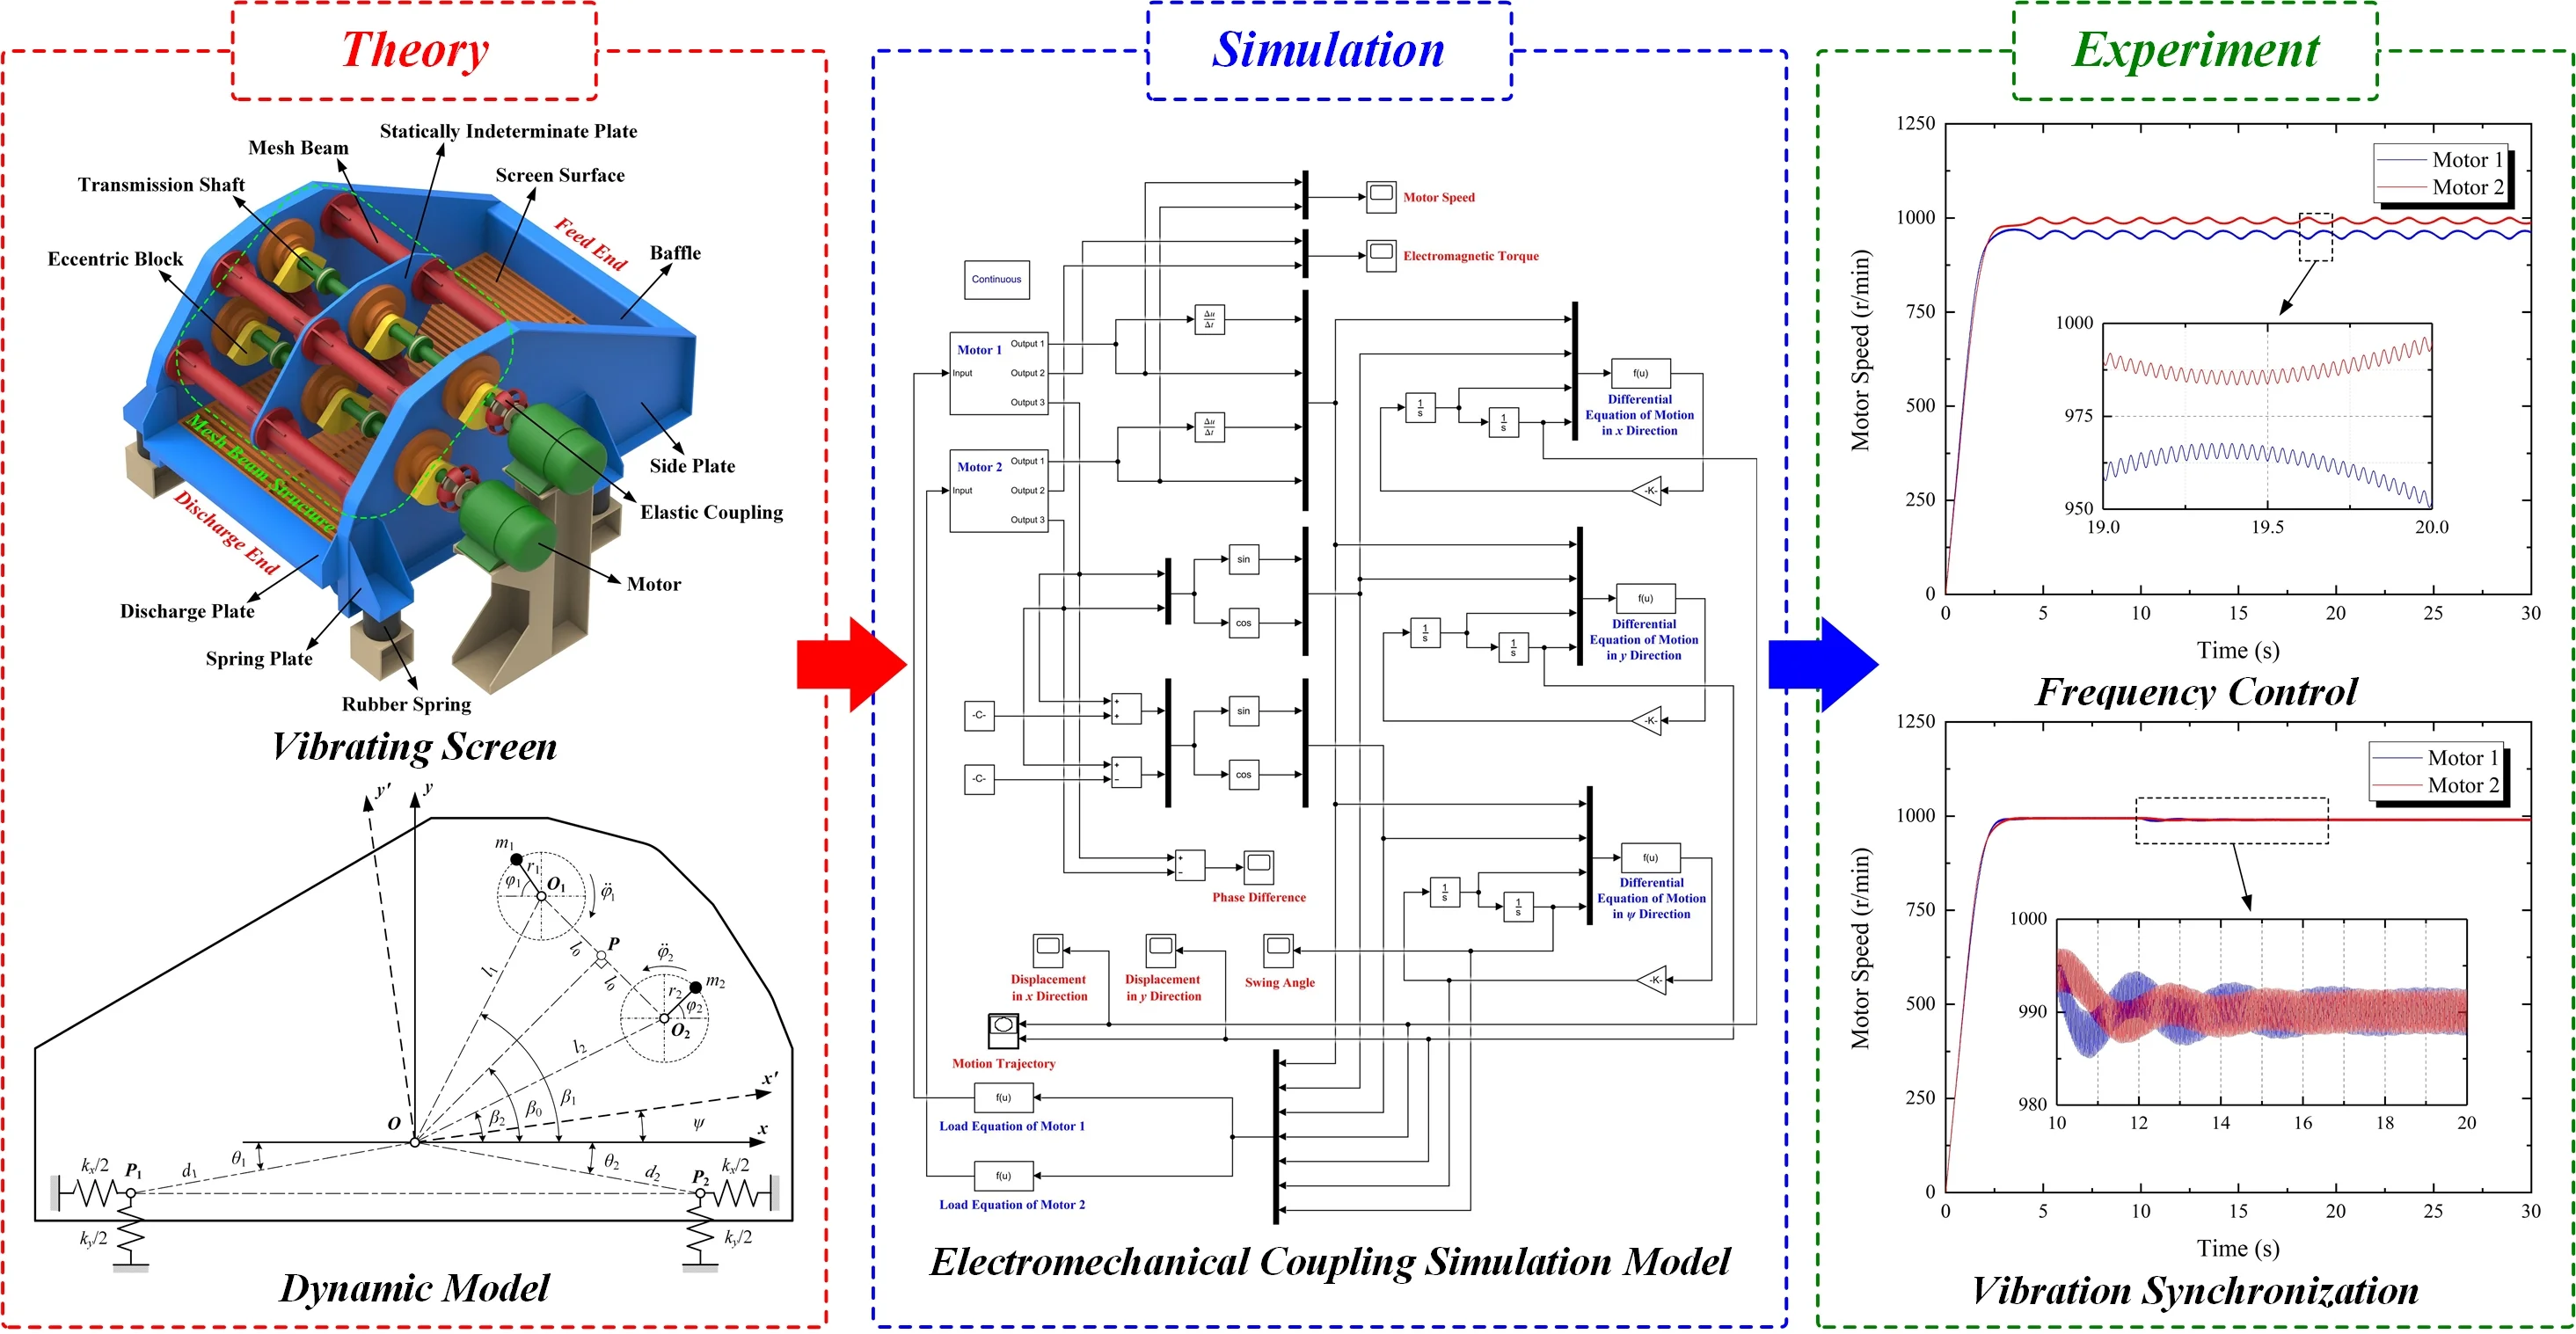 Dynamic characteristics analysis of a novel vibrating screen based on electromechanical coupling simulation